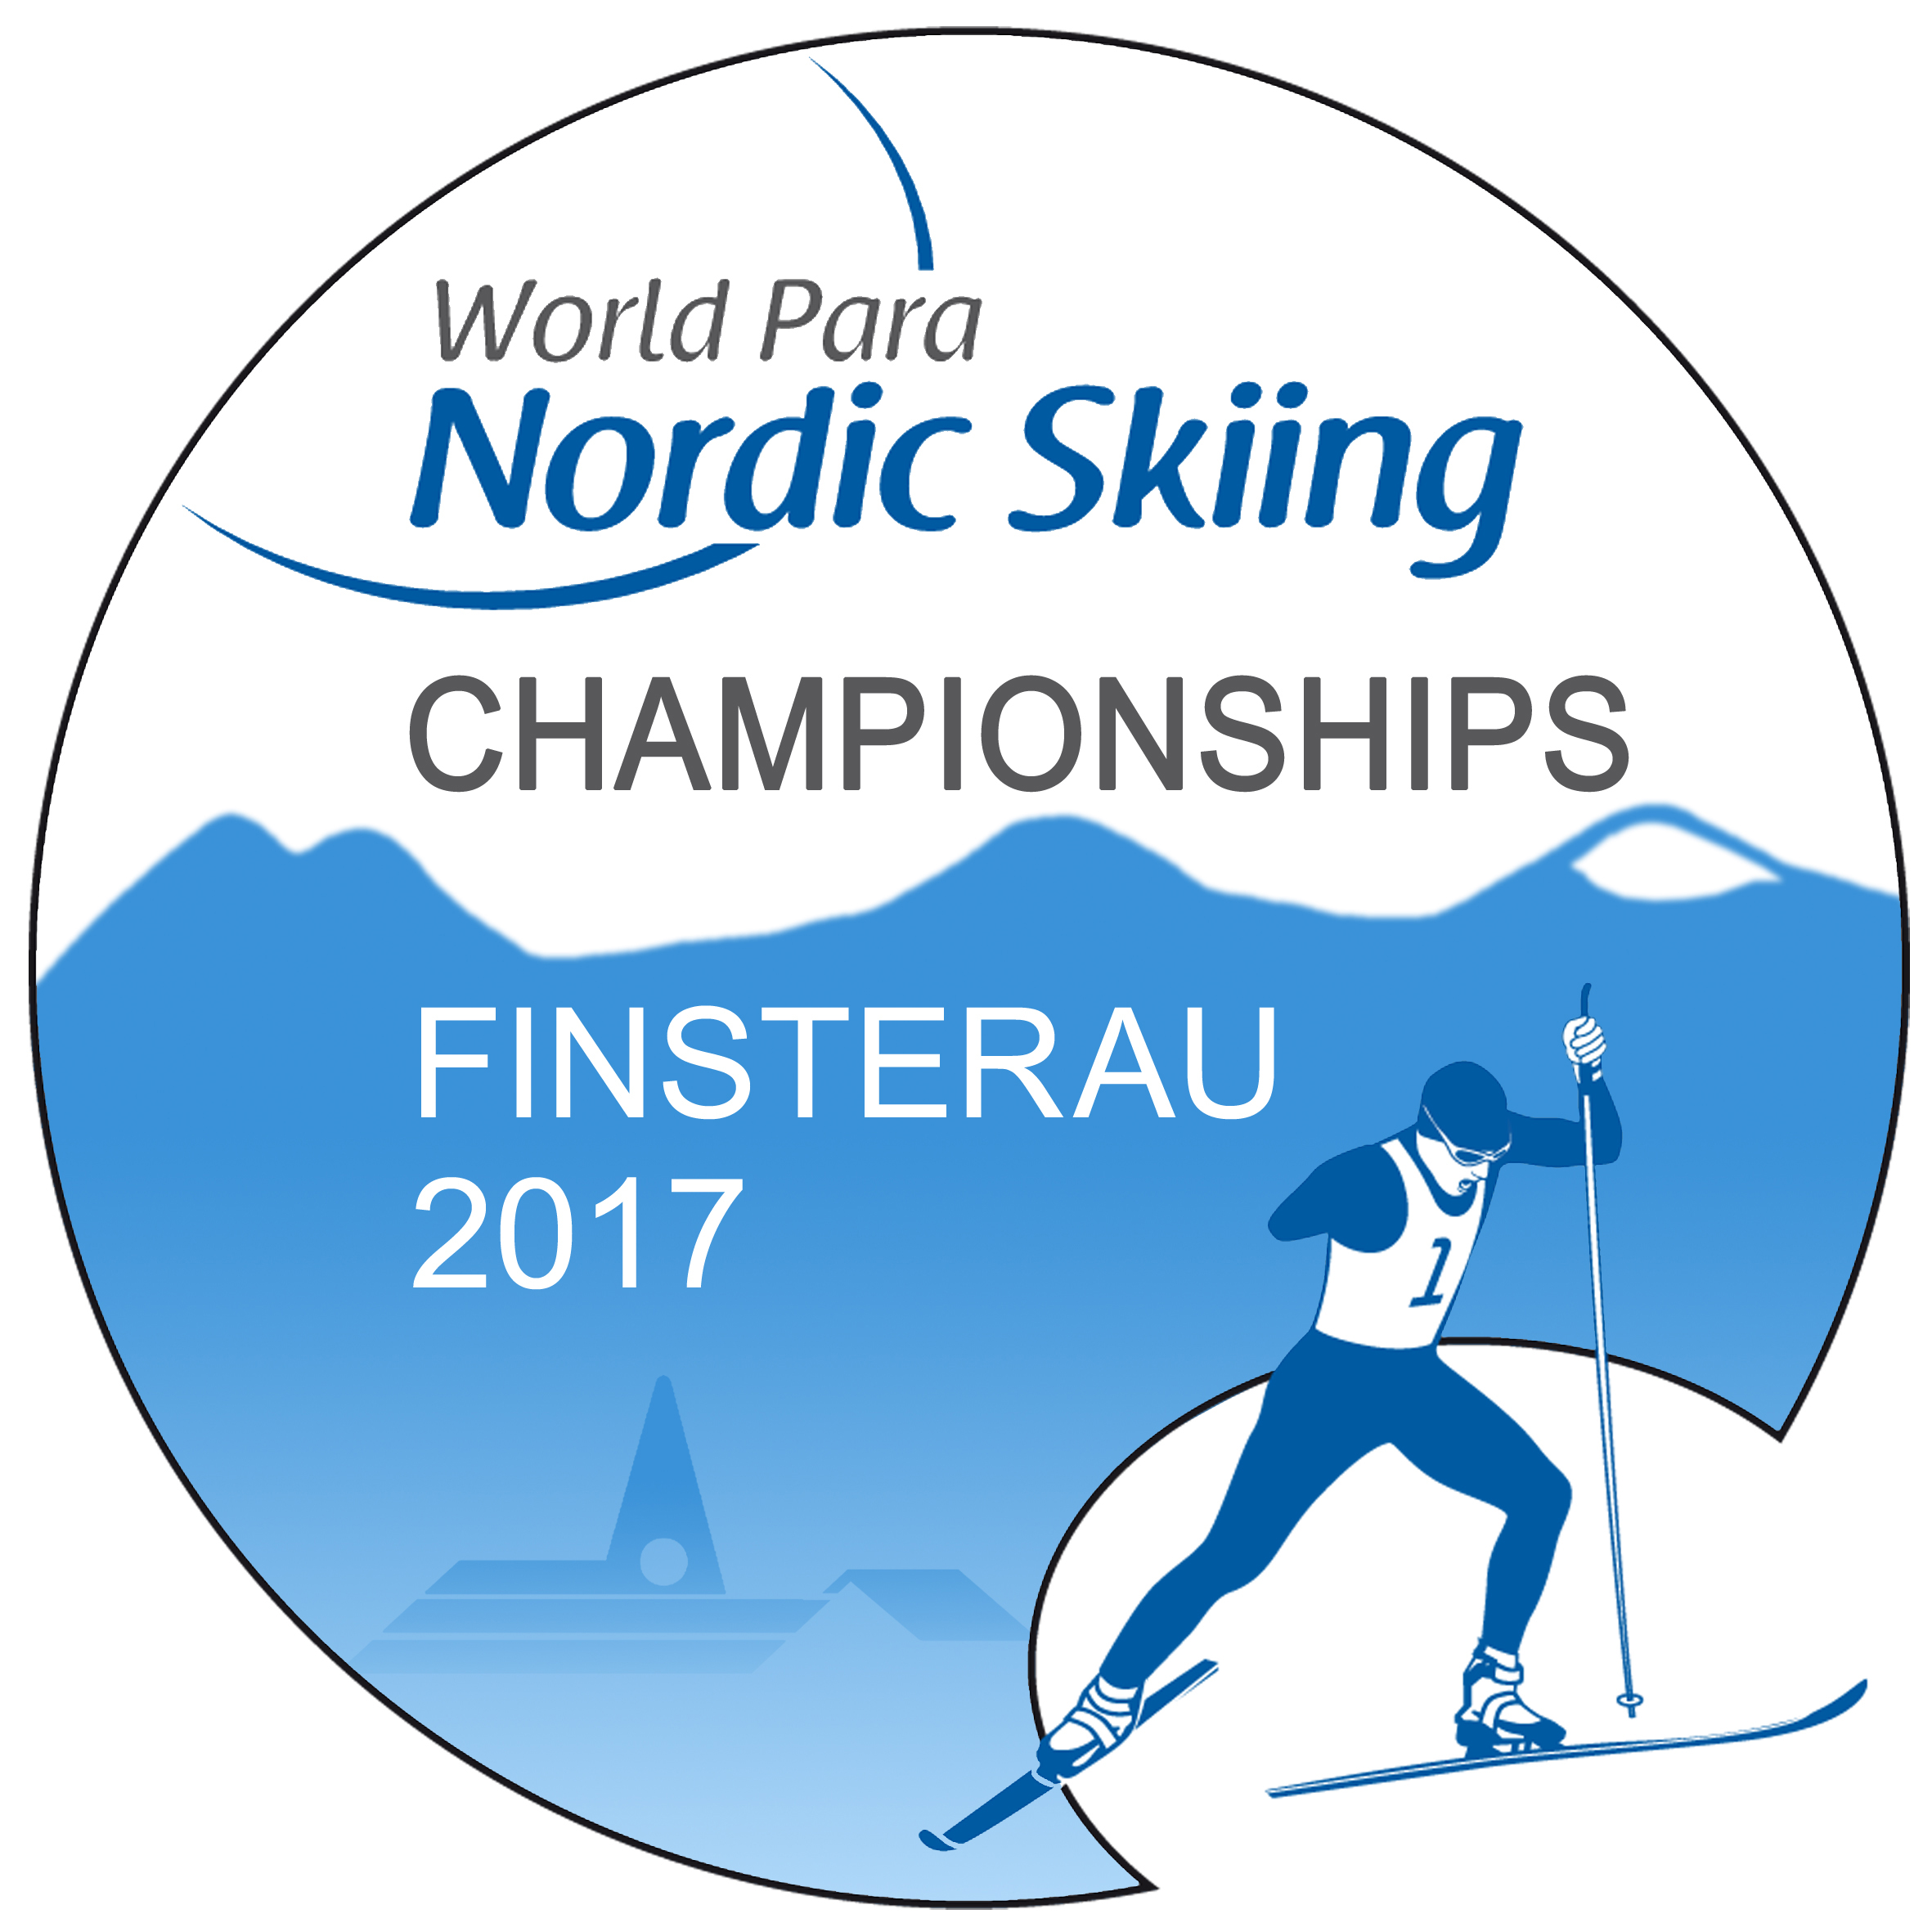 Finsterau 2017 World Para Nordic Skiing Championships - logo